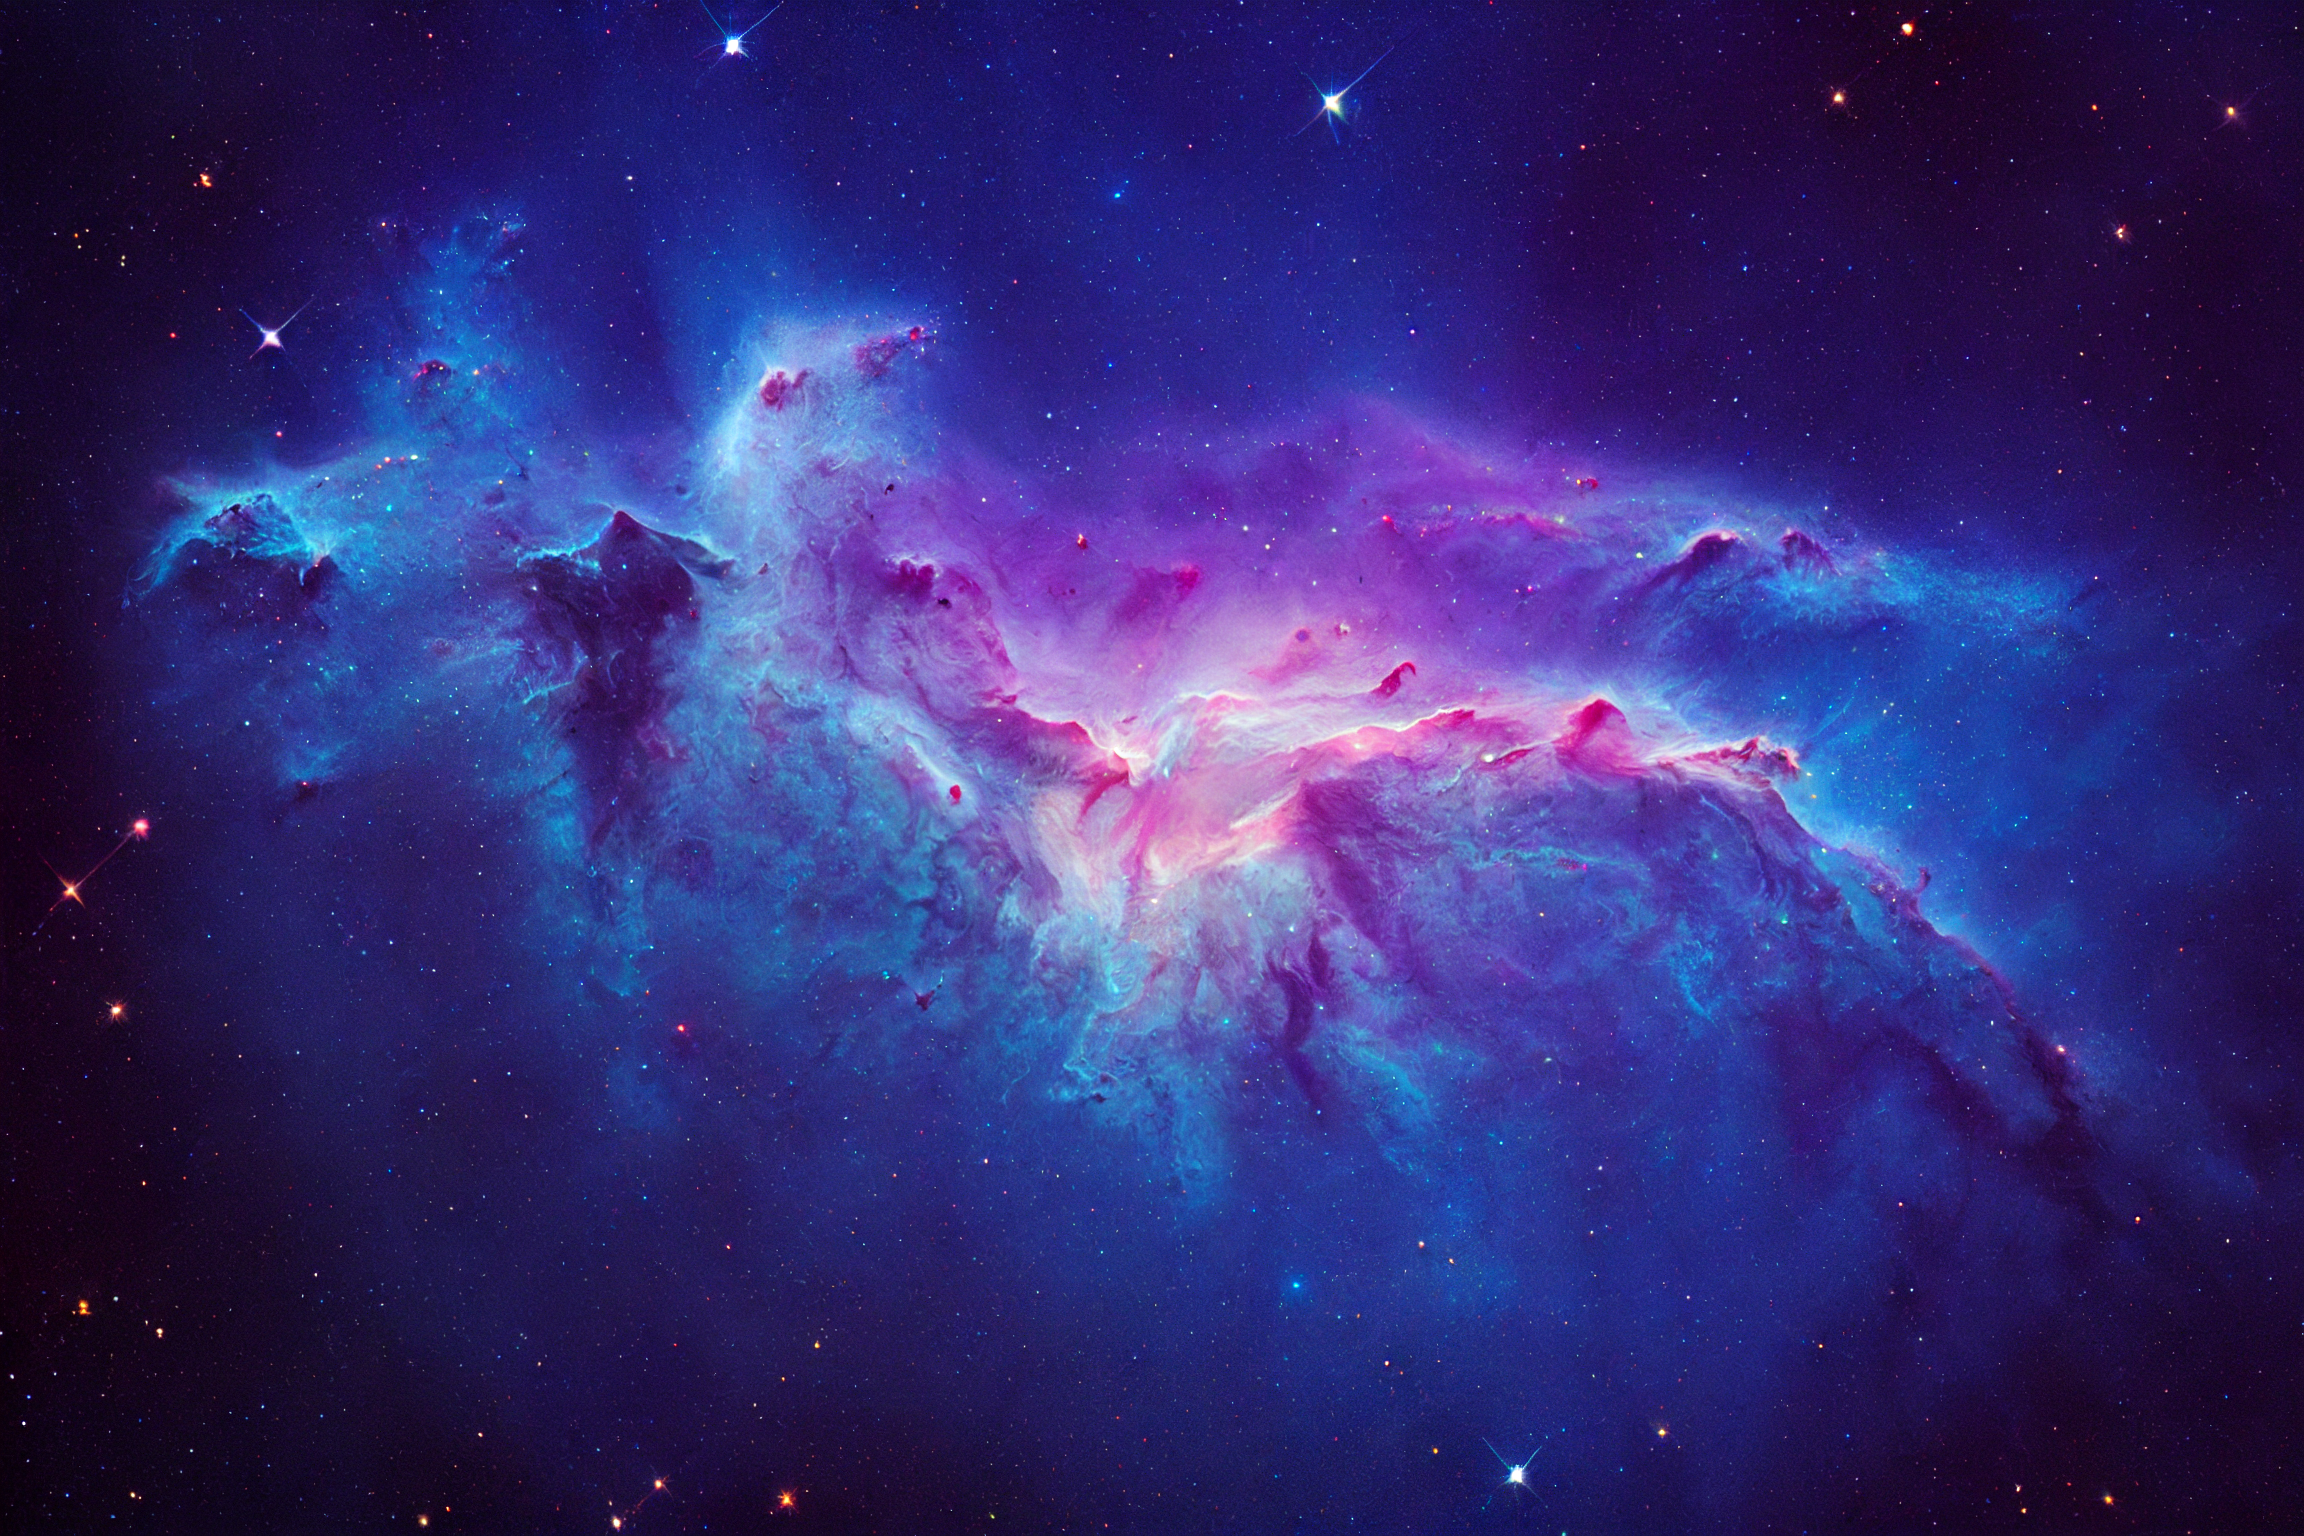 biozork_outer_space_stars_nebula_galaxy_ac4acf0f-6a4f-40c6-a9d3-3f459b5ae7ed.png